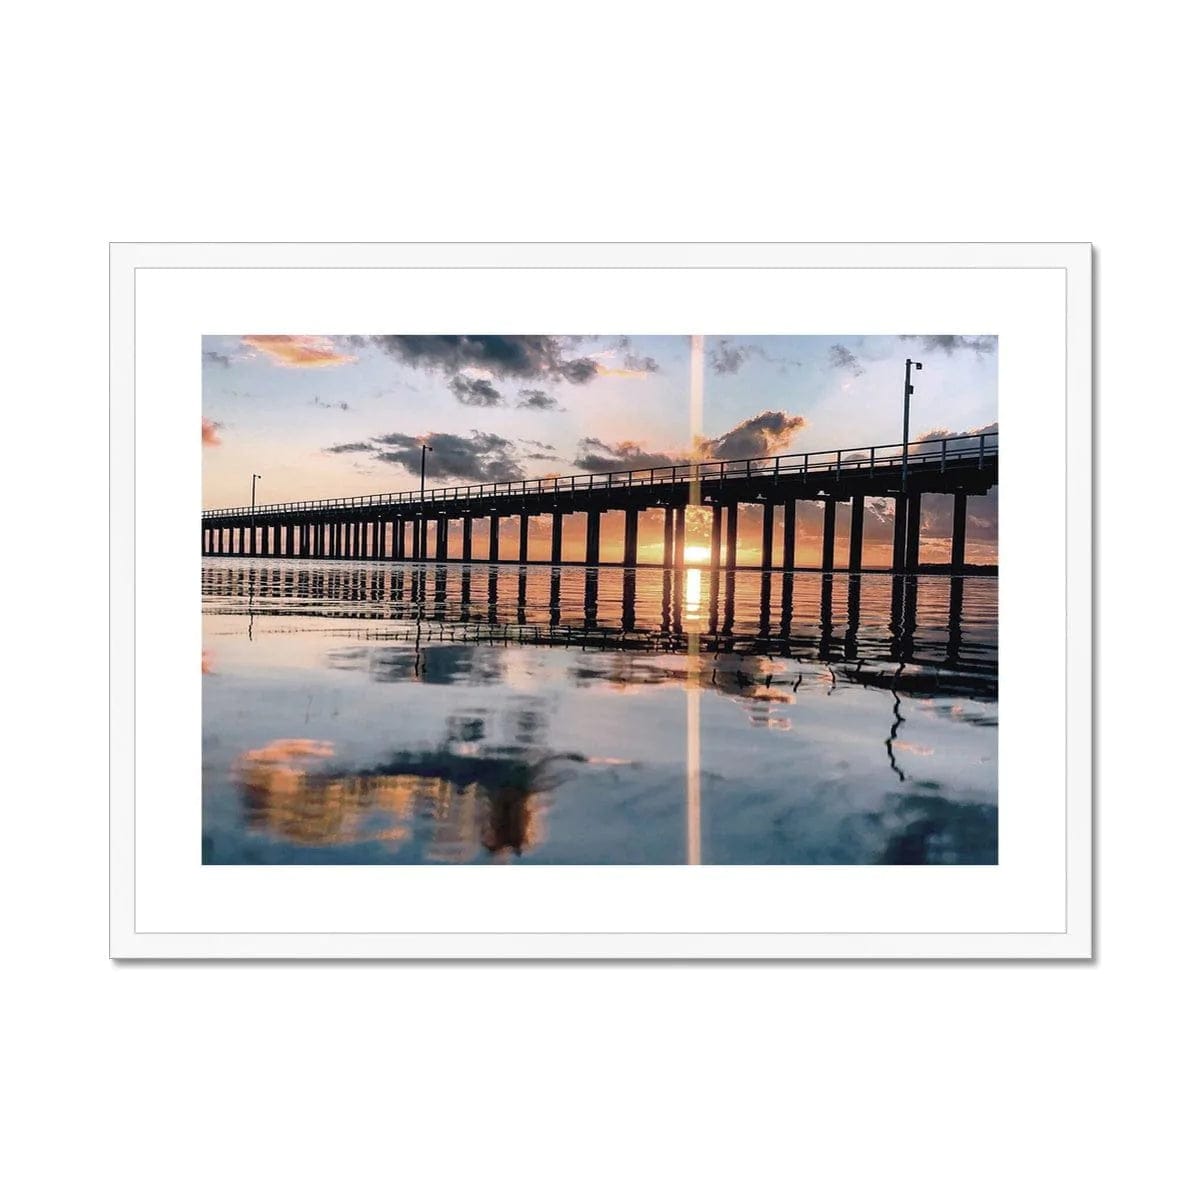 Seek & Ramble Framed A4 Landscape / White Frame Urungan Pier Sunrise Framed & Mounted Print